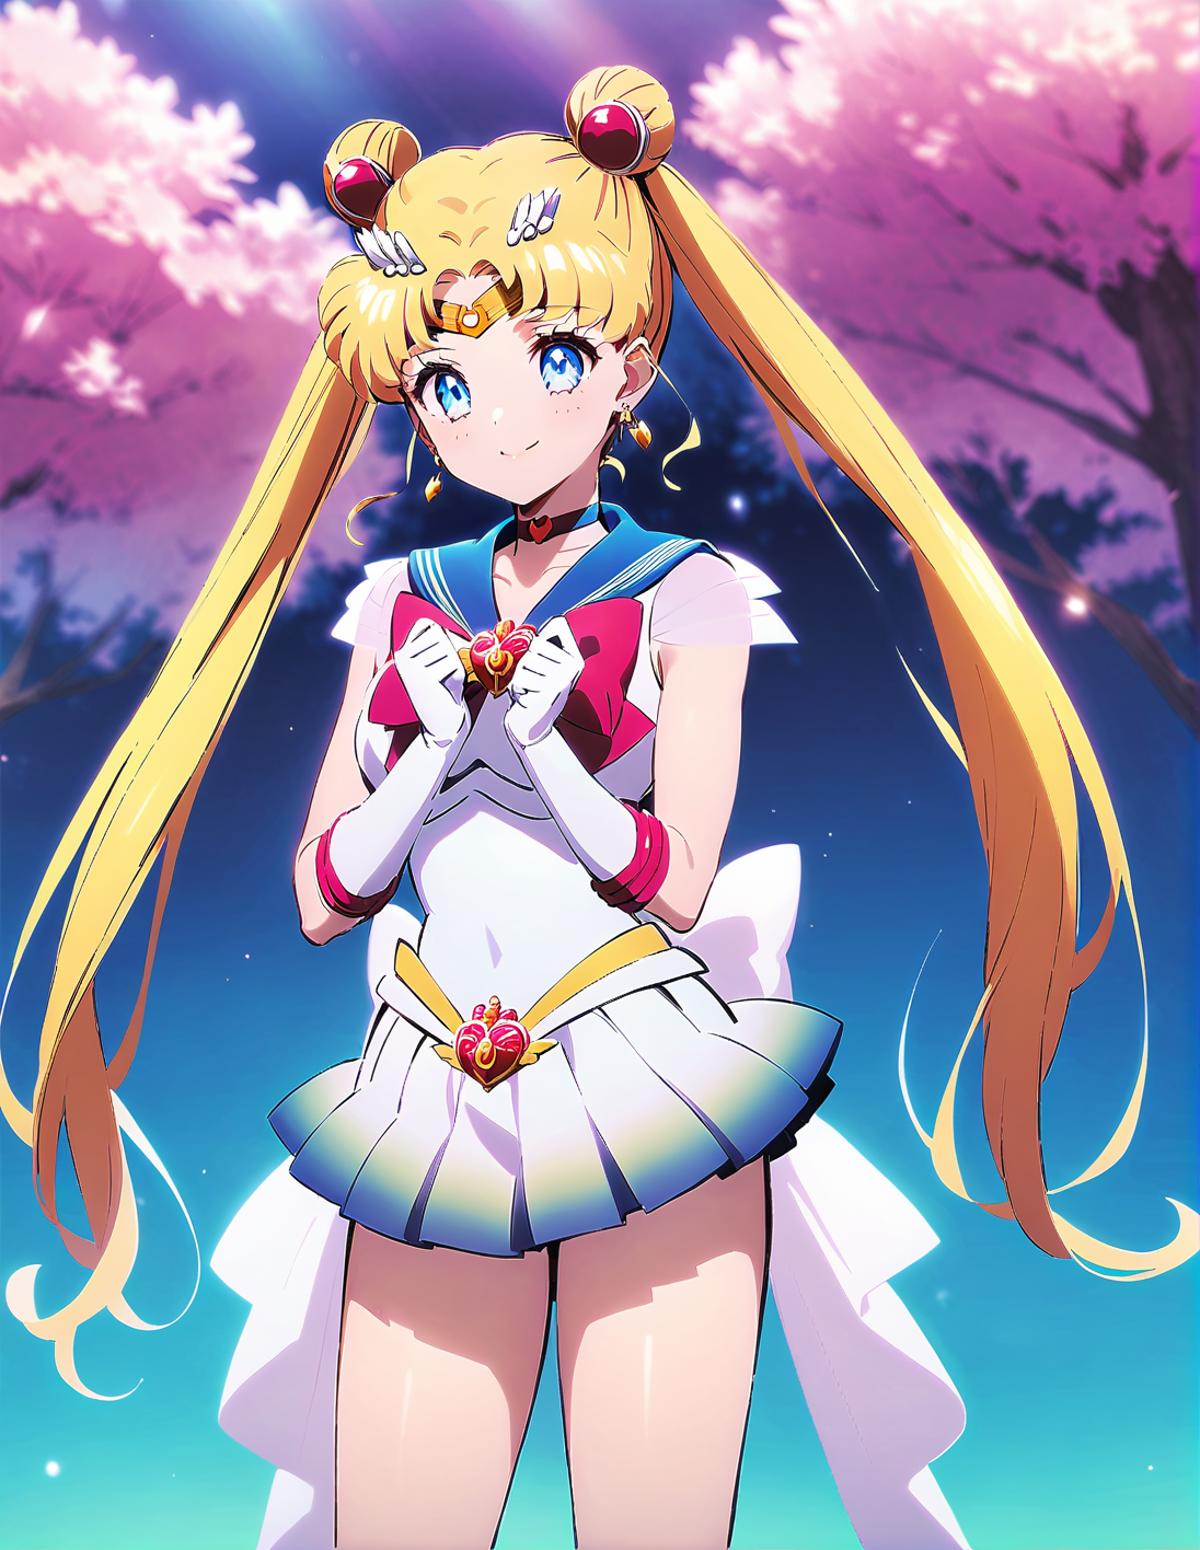 SDXL] Super Sailor Moon / スーパーセーラームーン - Animagine-v2.0 